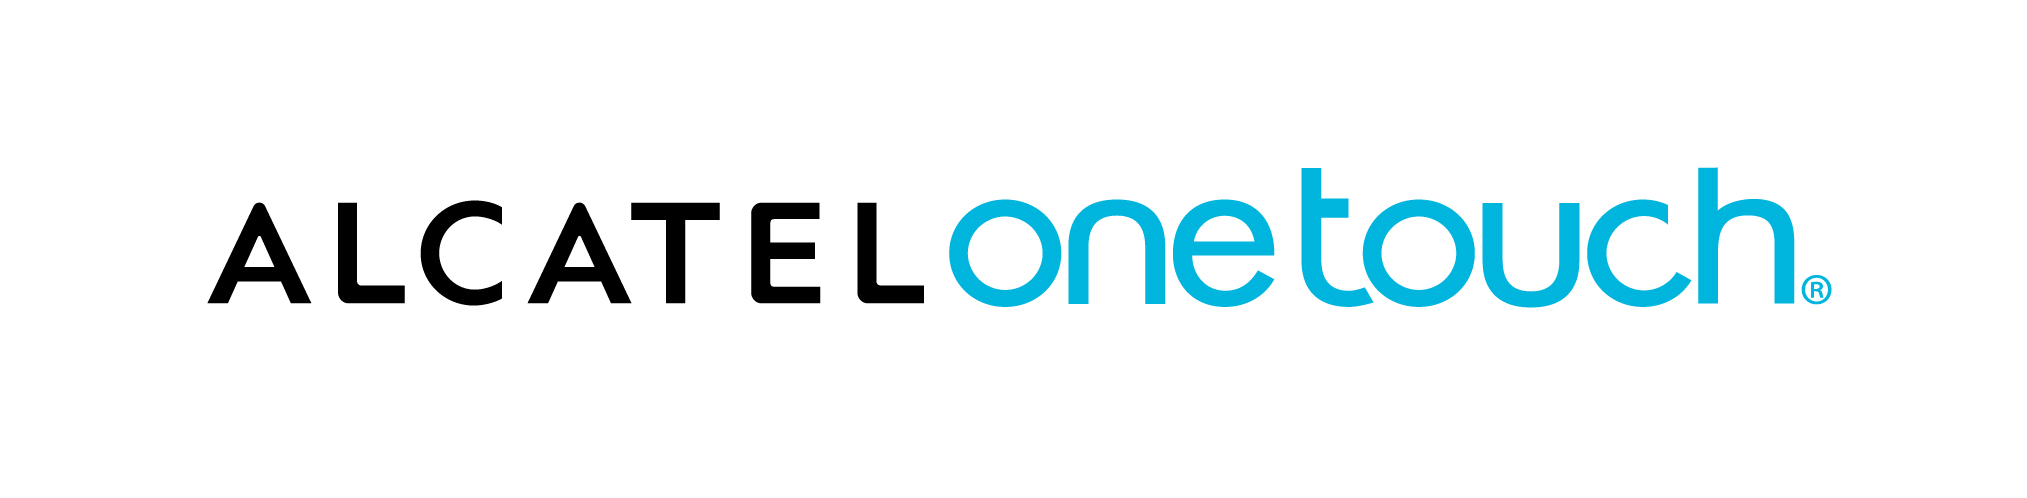 Alcatel Onetouch Logo photo - 1